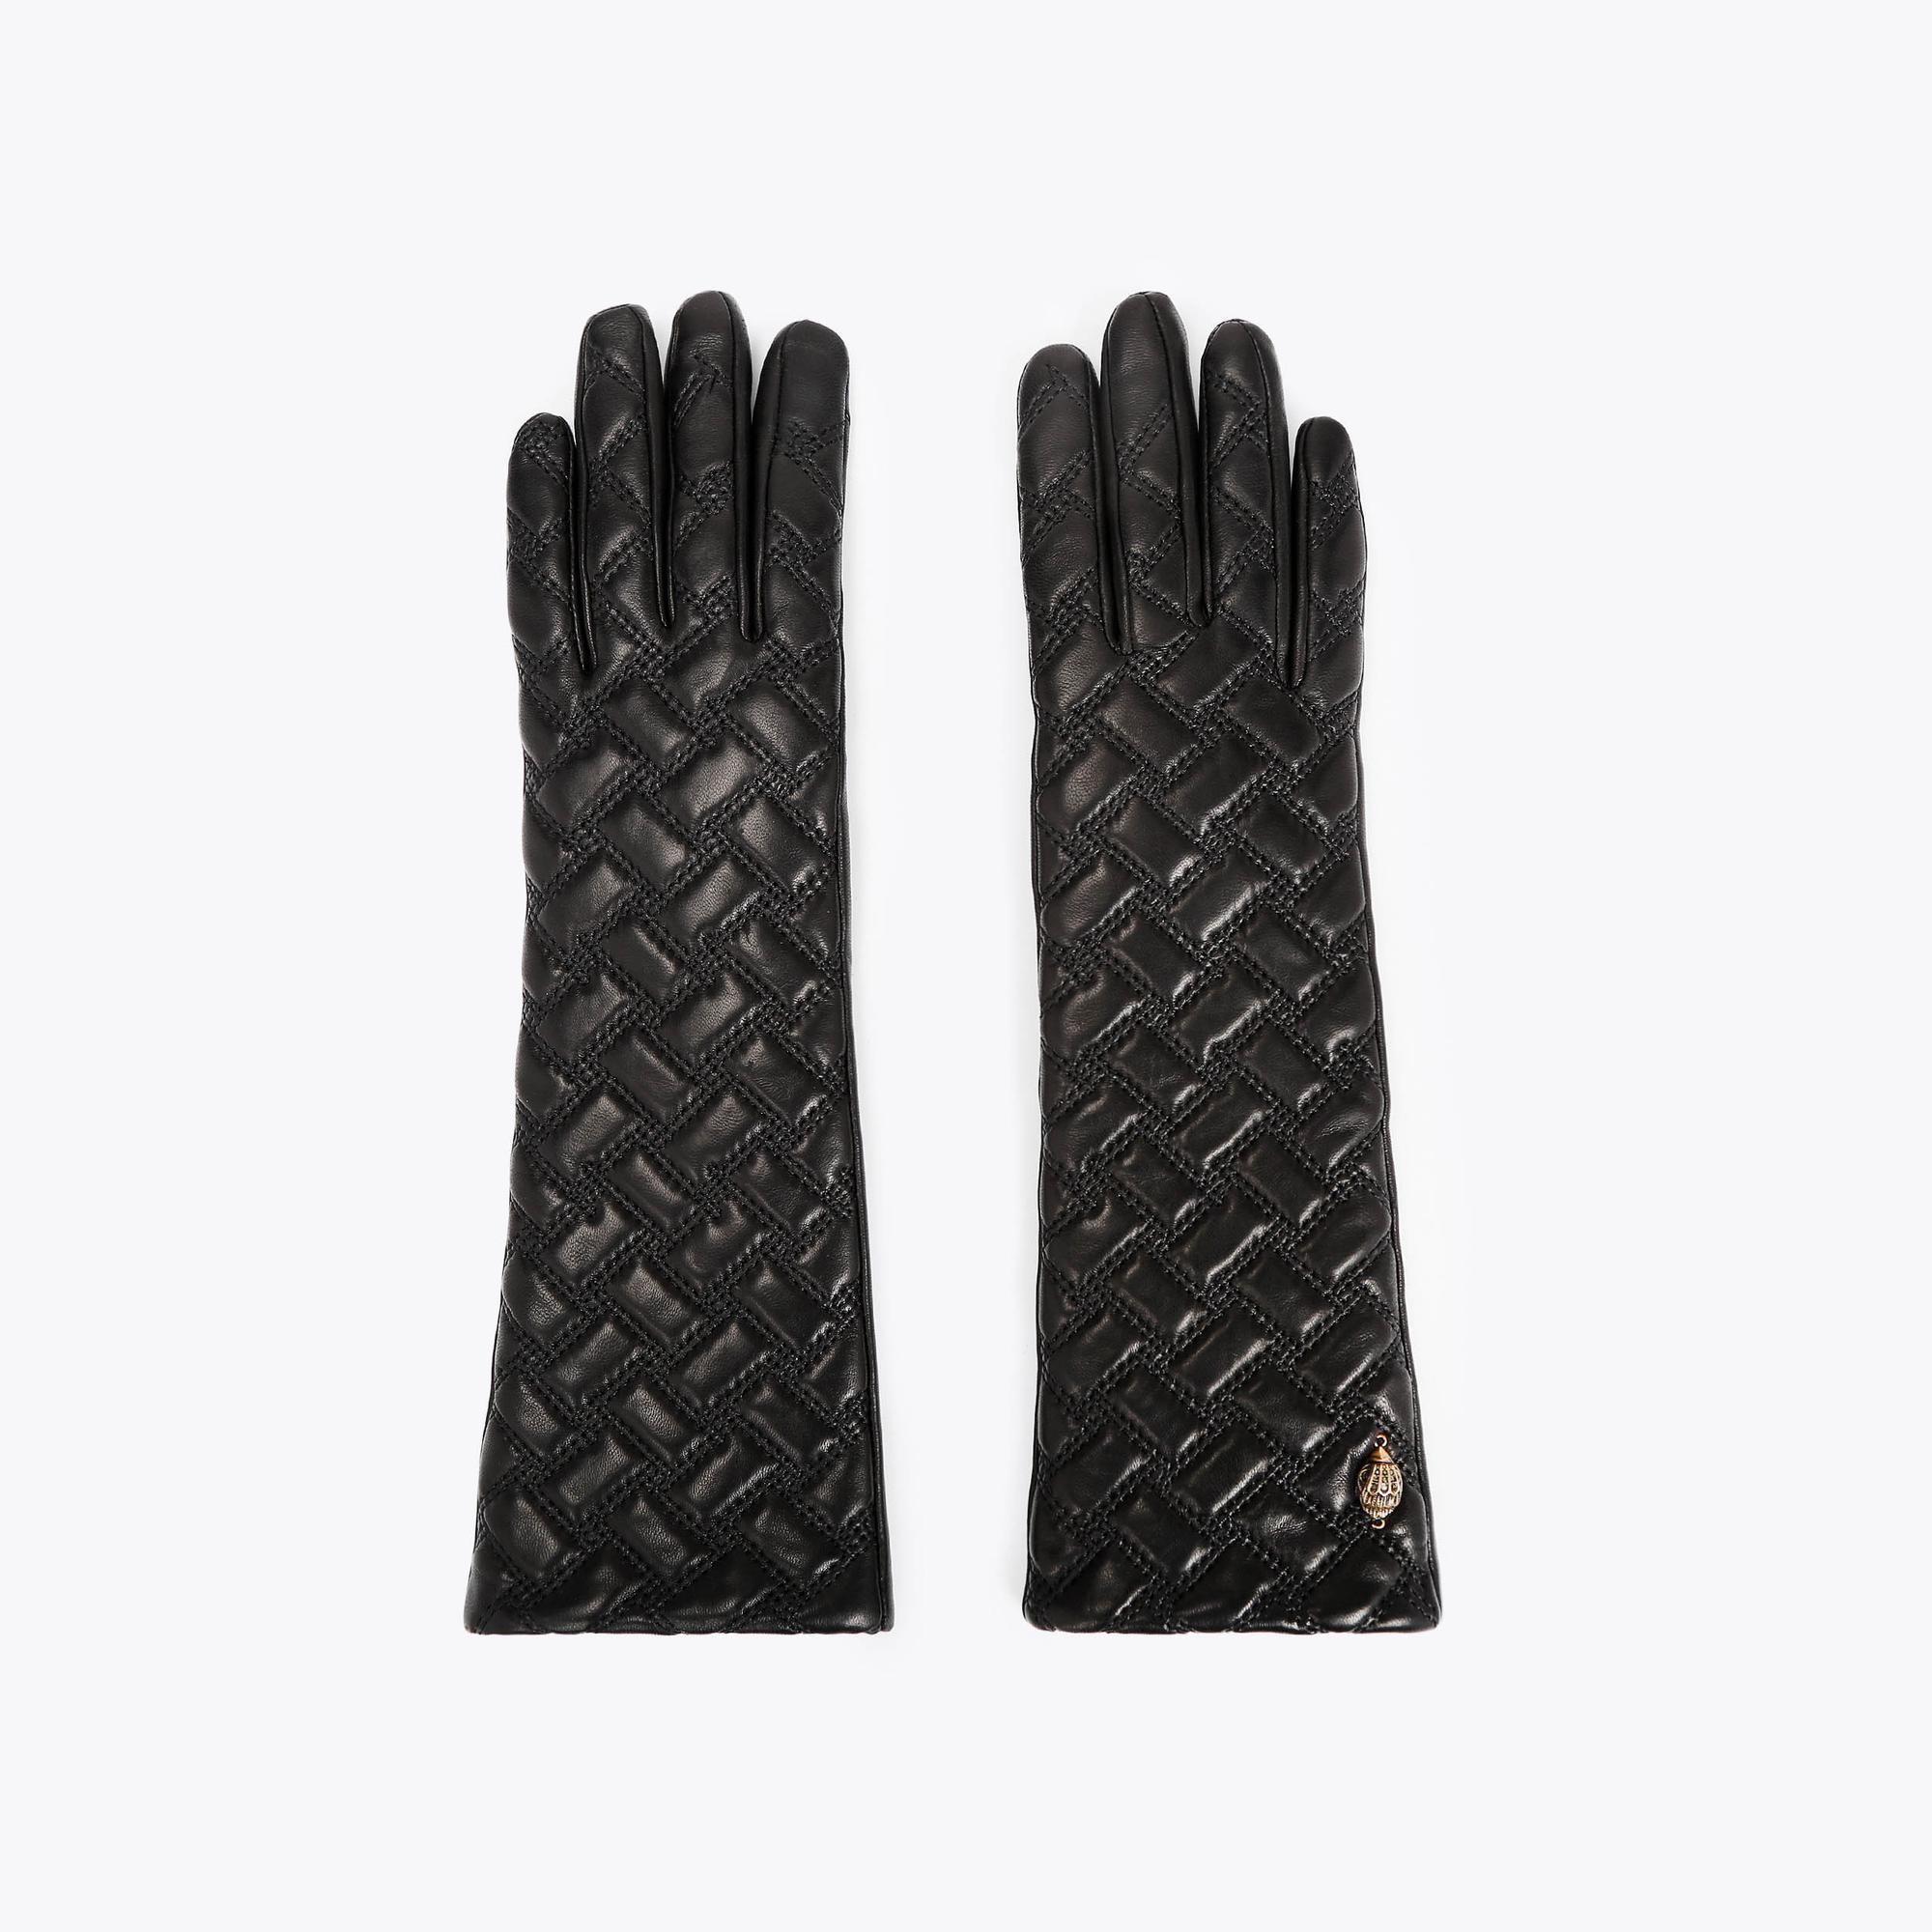 KENSINGTON LONG GLOVES Black Quilted Long Gloves by KURT GEIGER LONDON